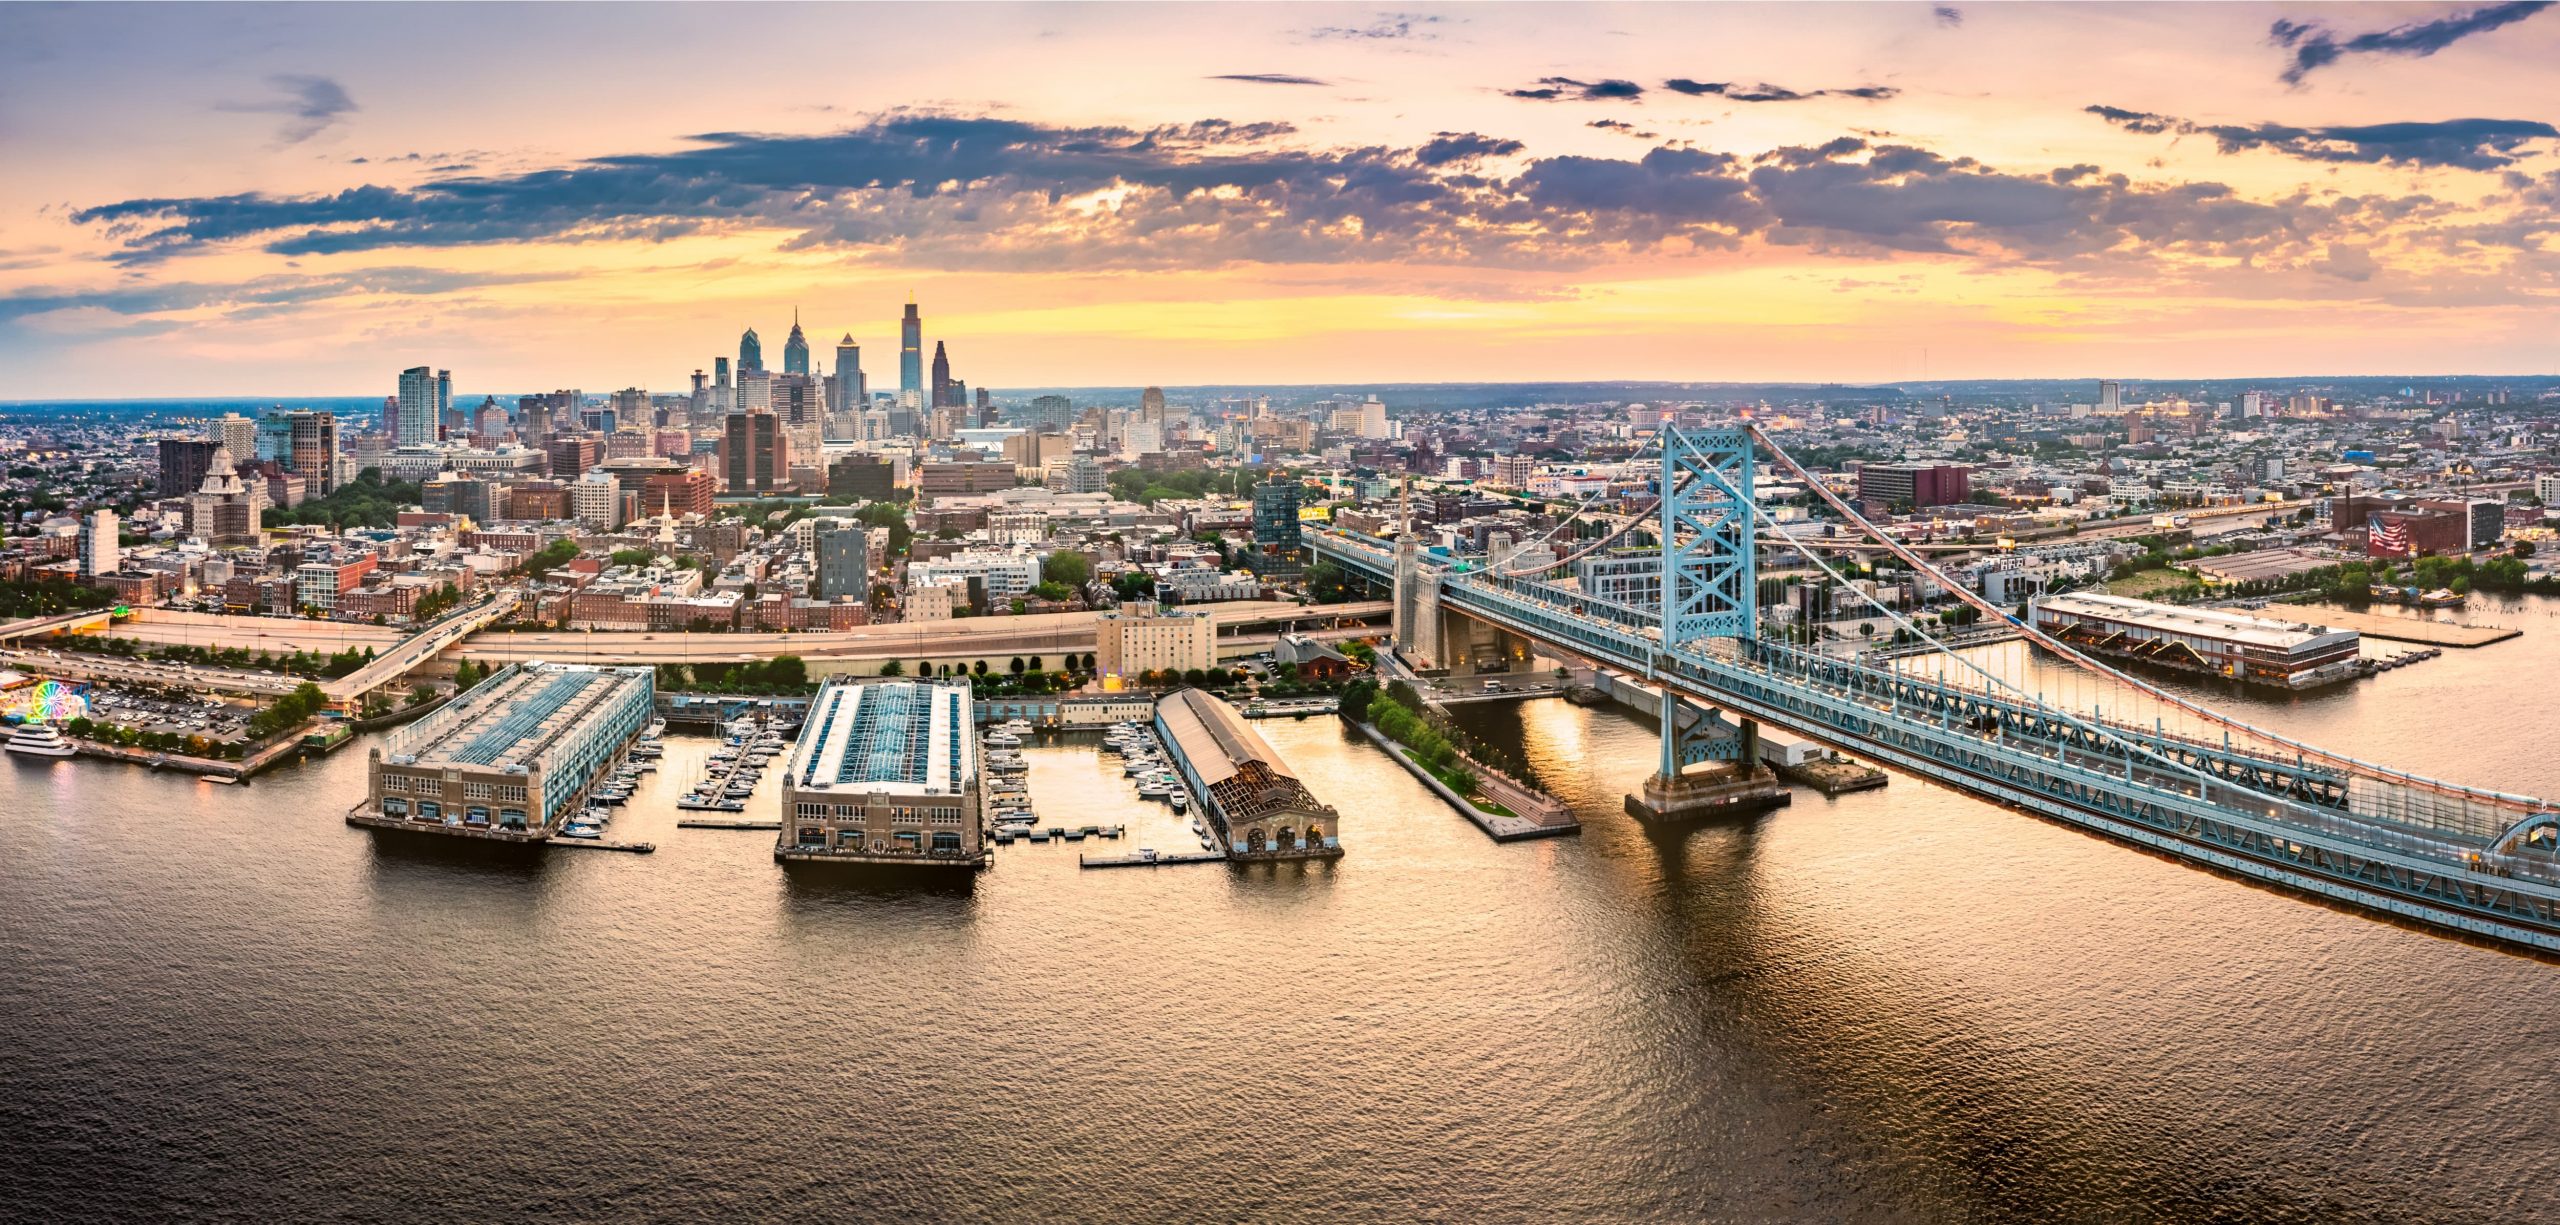 Philadelphia's skyline at sunset time.